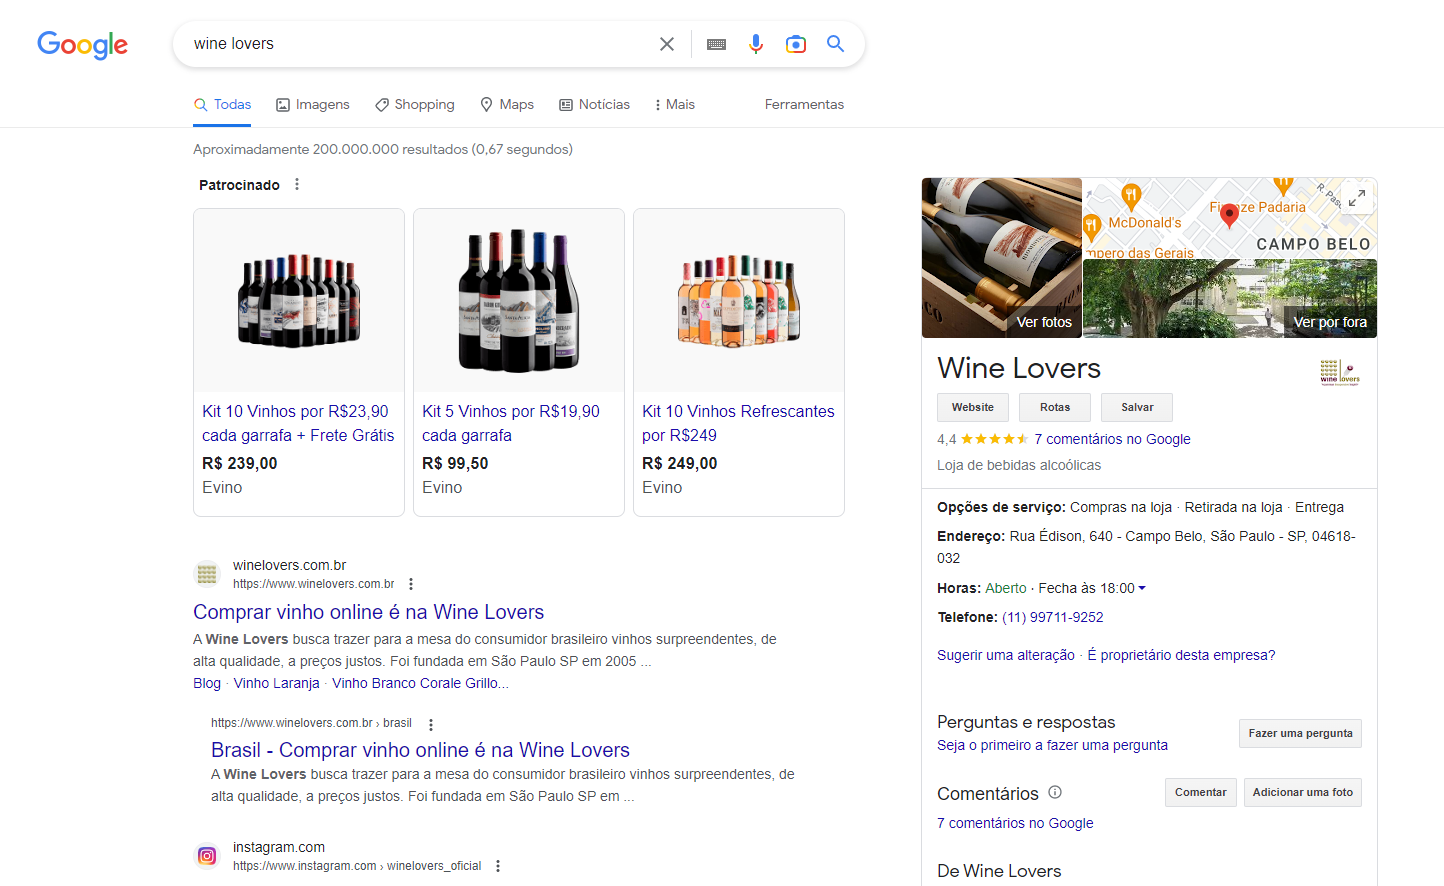 Perfil da empresa Wine Lovers na página de busca do Google